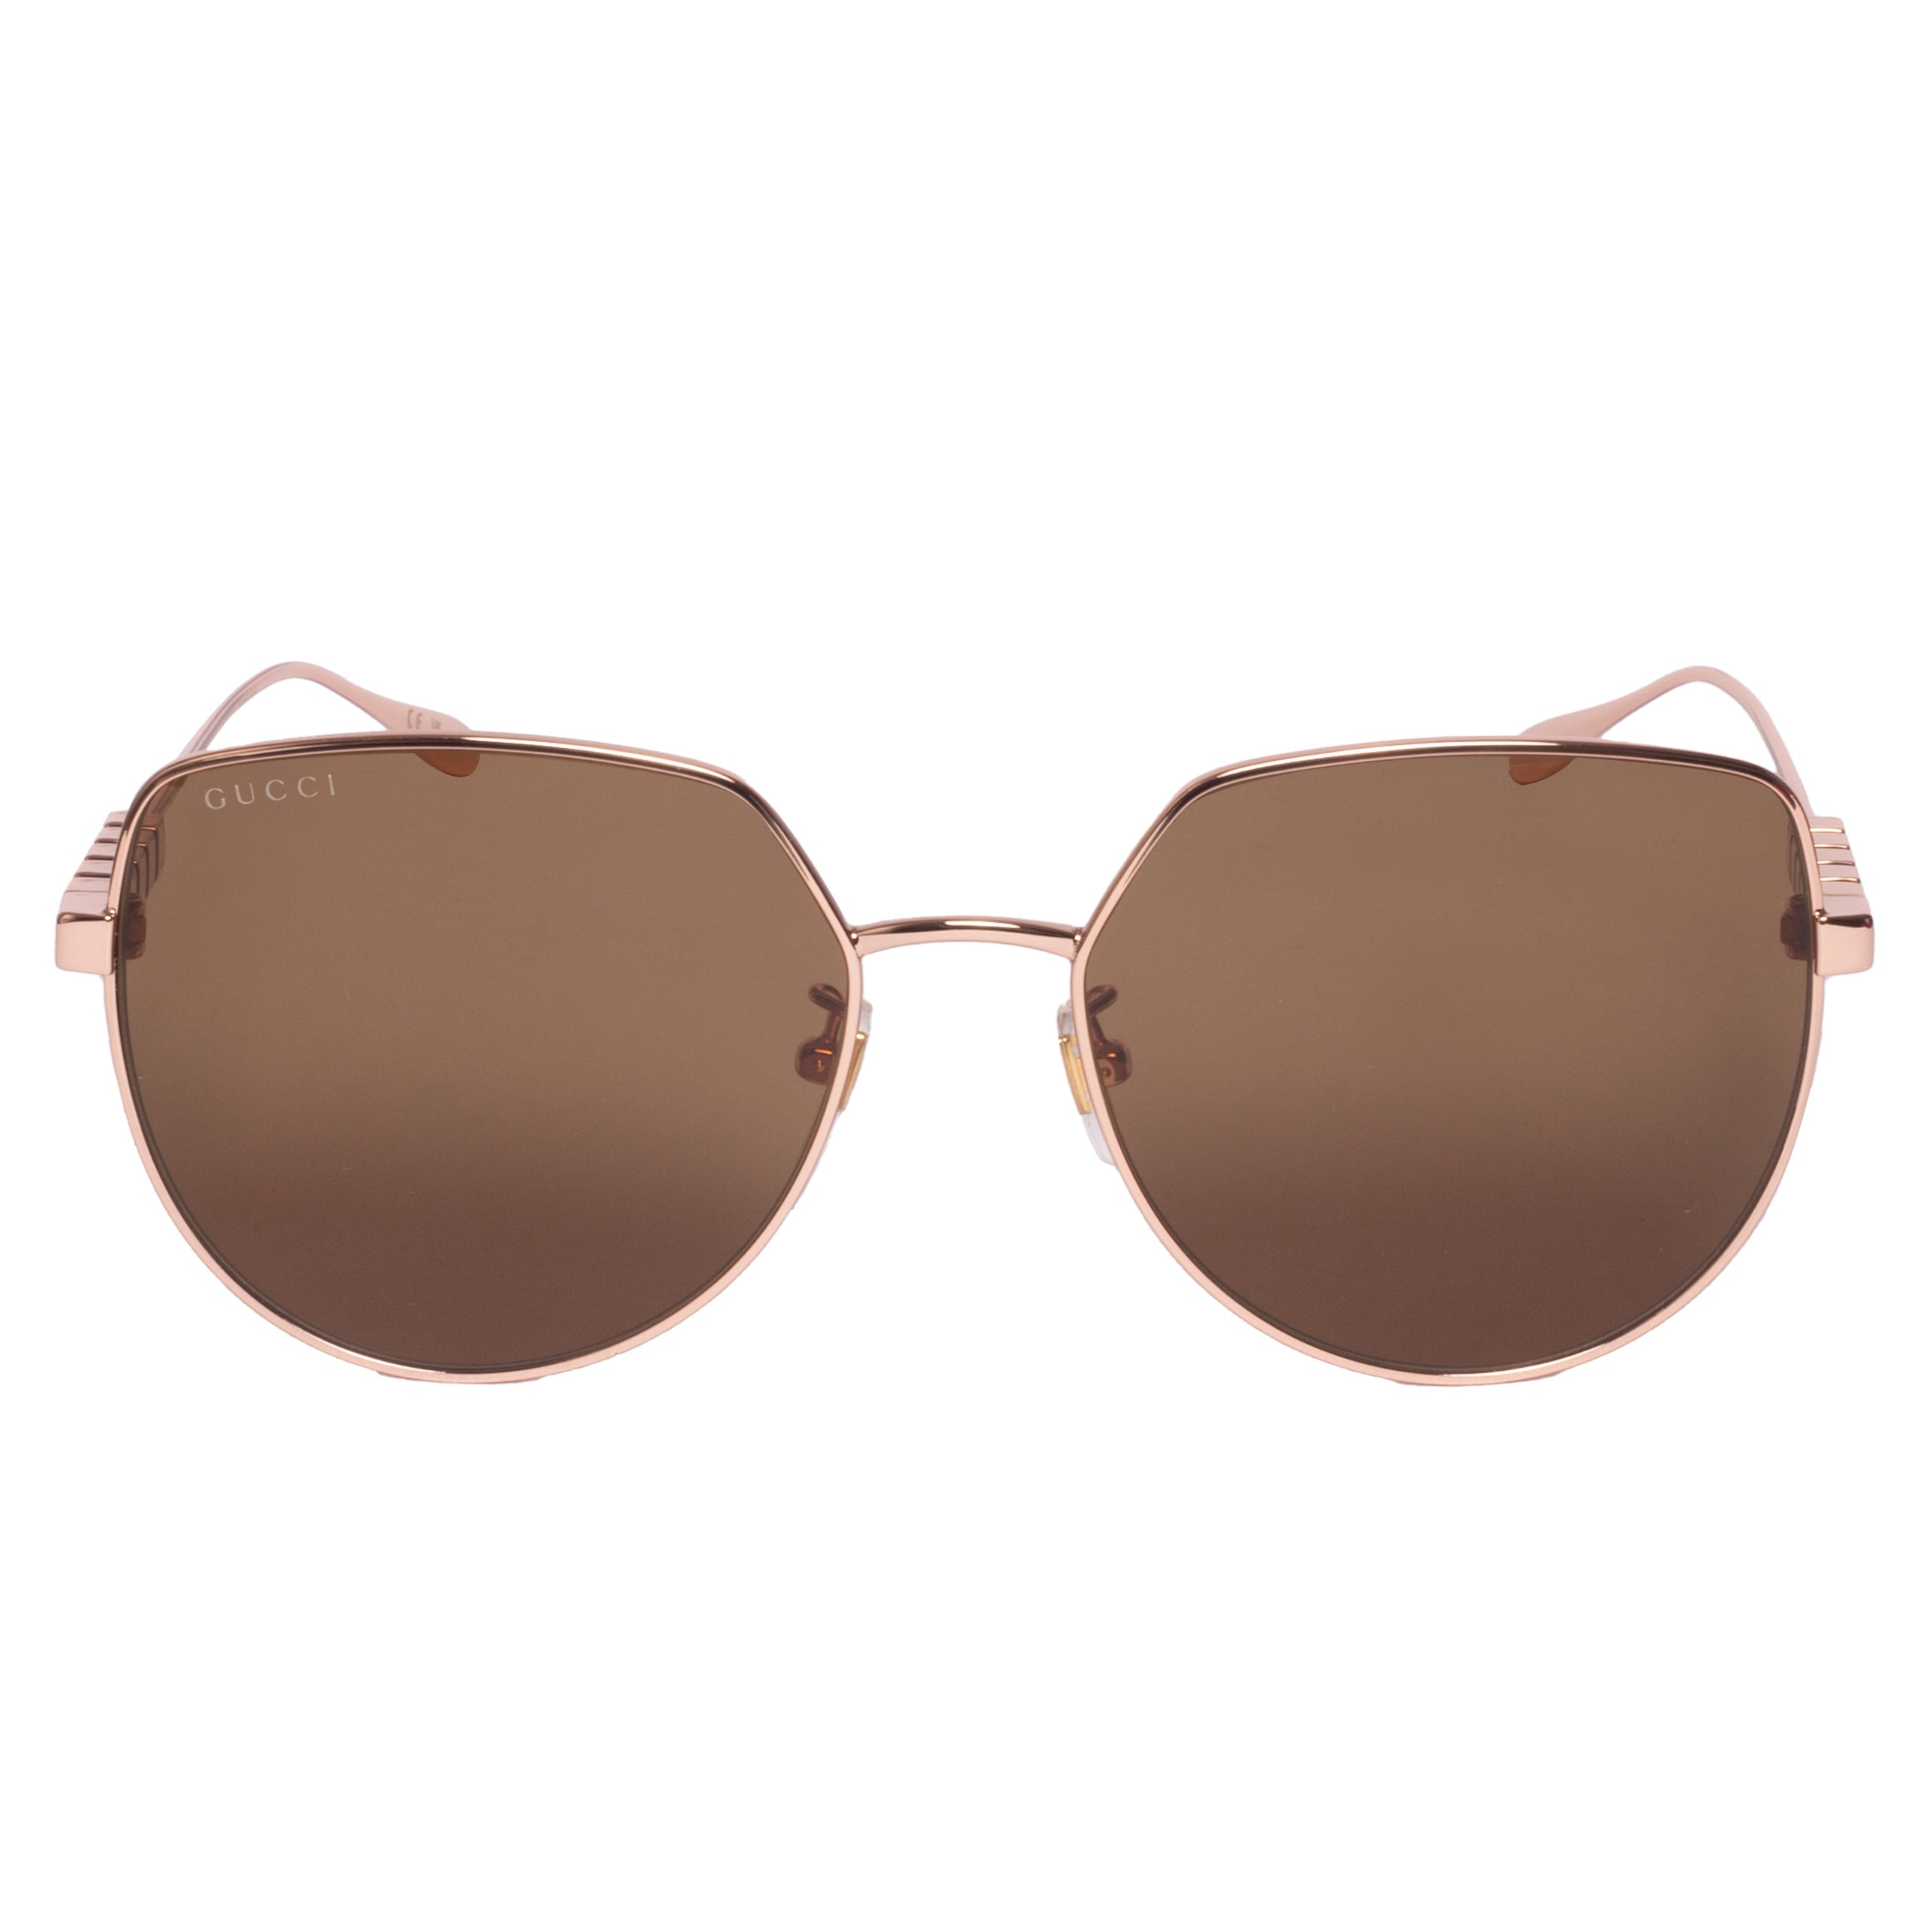 Gucci-GG 1435SA-58-002 Sunglasses - Premium Sunglasses from Gucci - Just Rs. 30600! Shop now at Laxmi Opticians